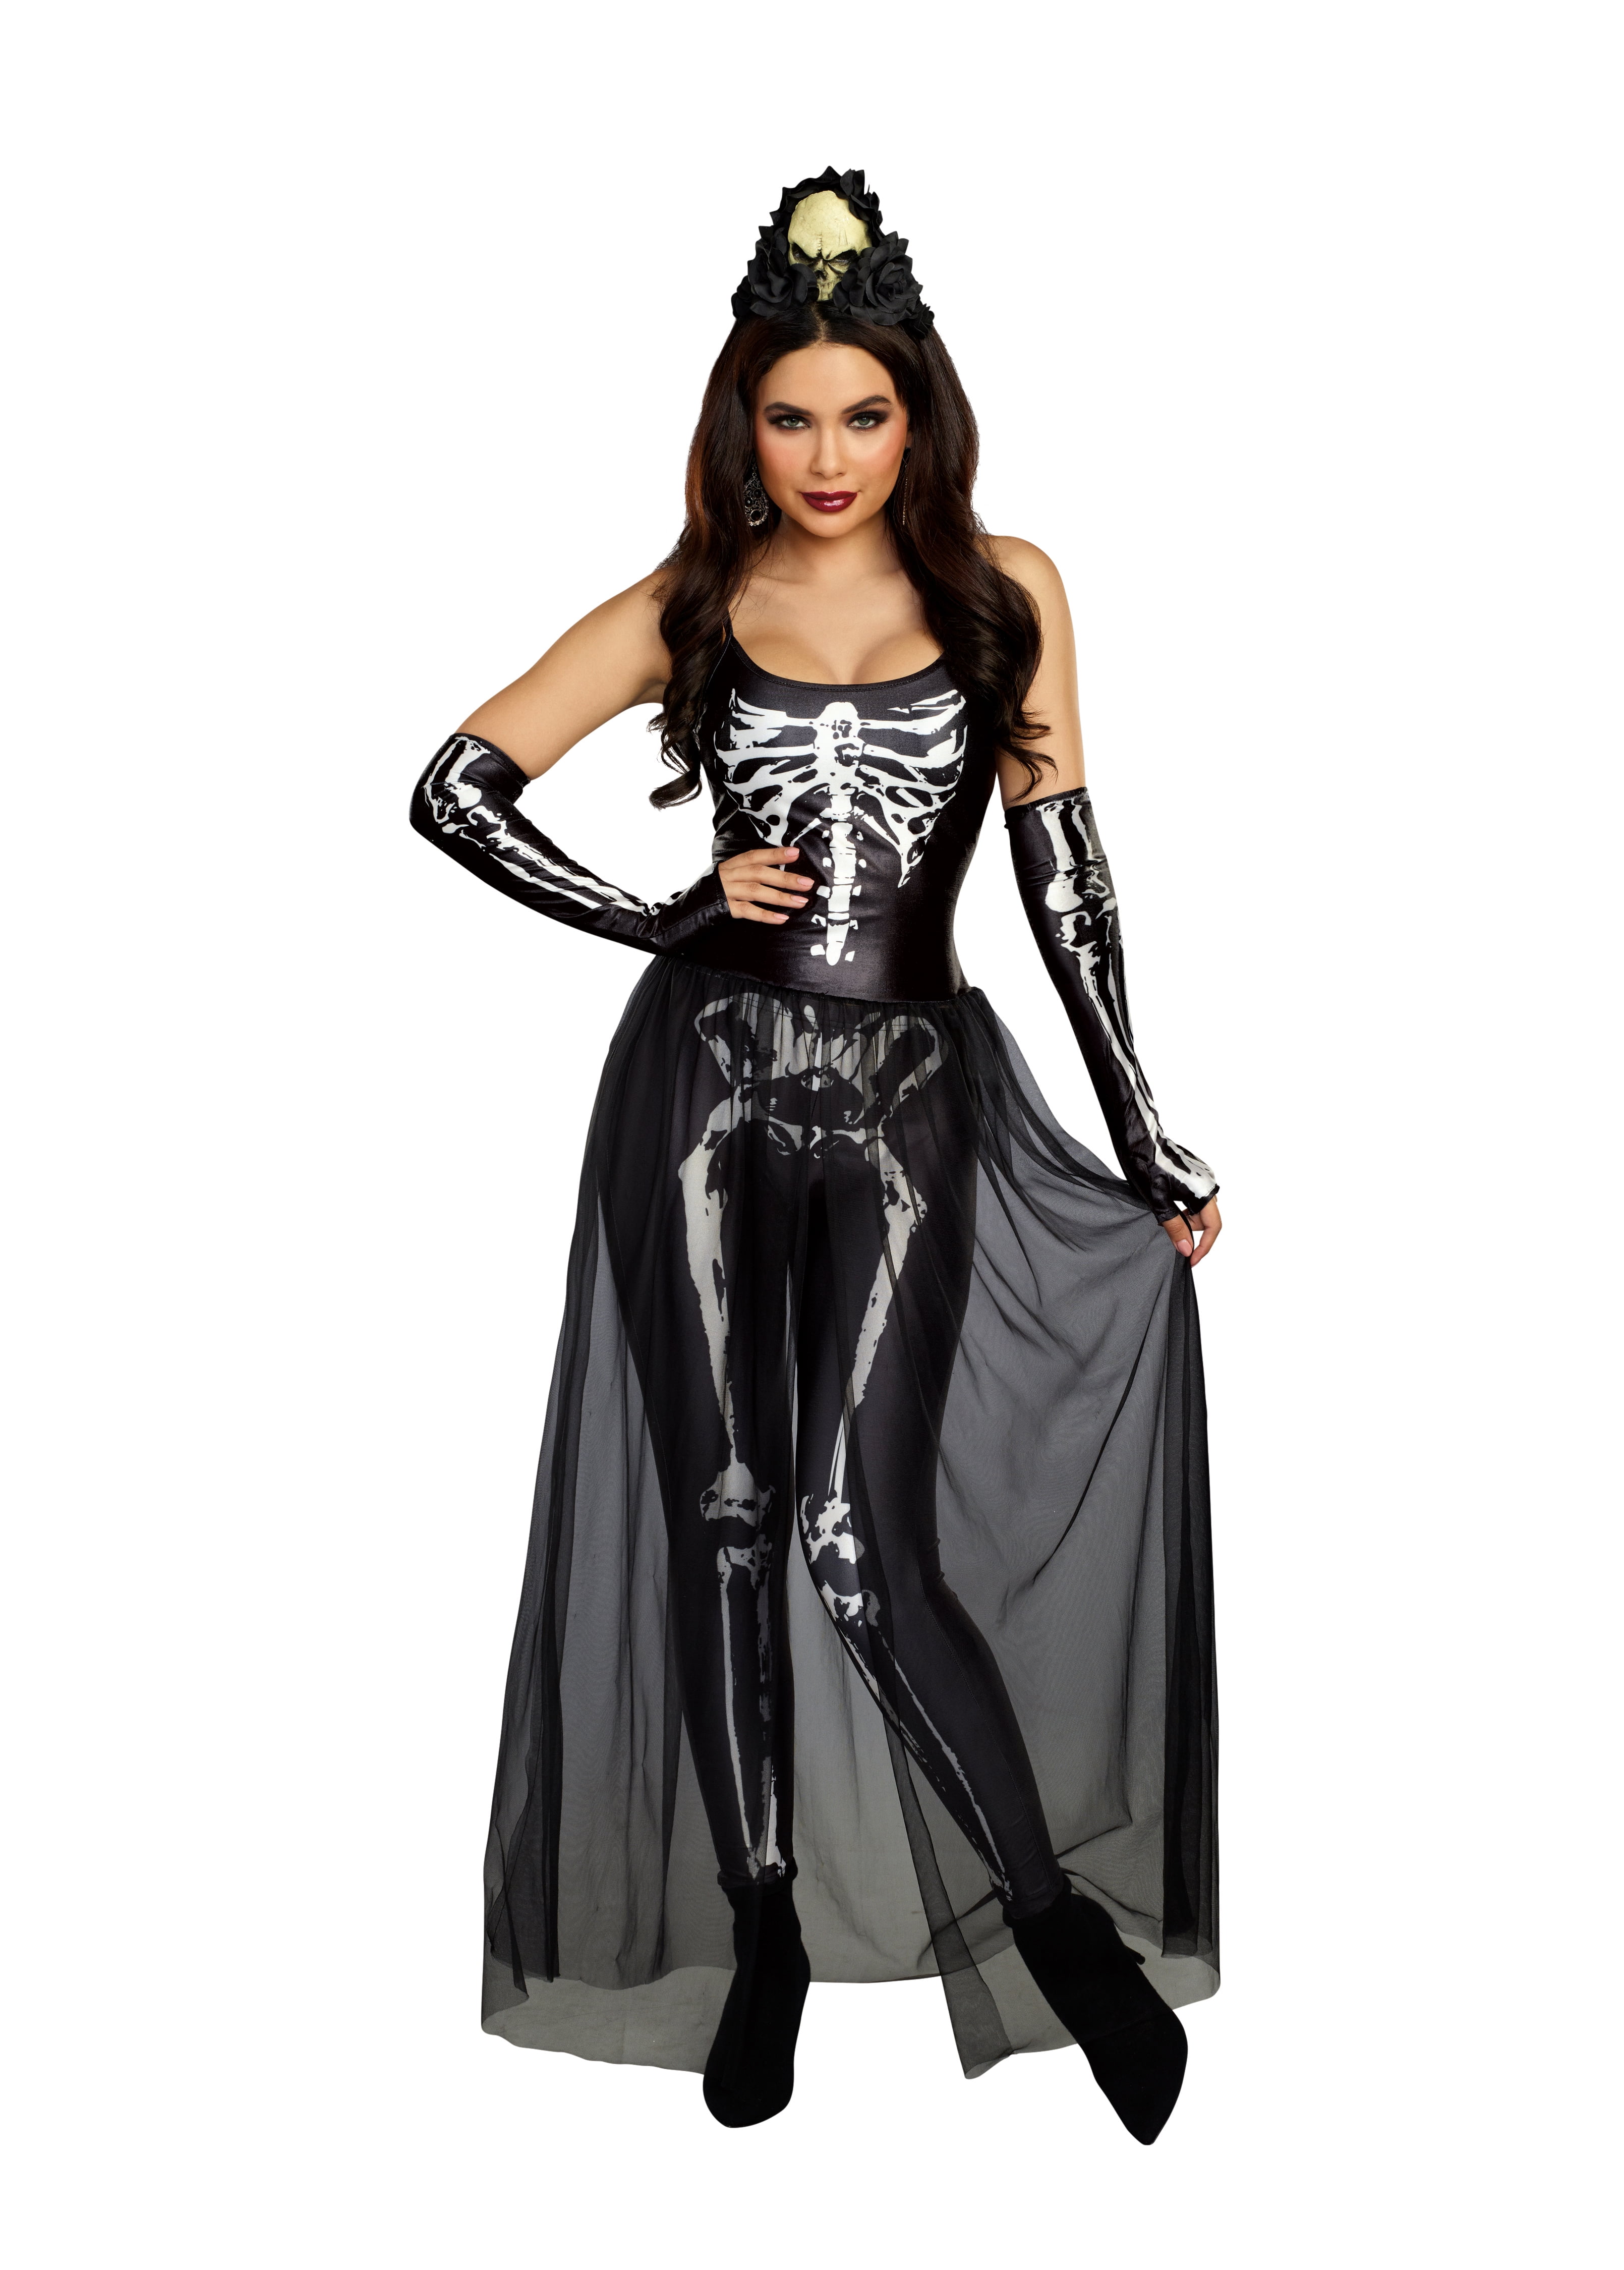 SKELETON GLOVES PINK Bones Print Halloween Goth Costume Horror